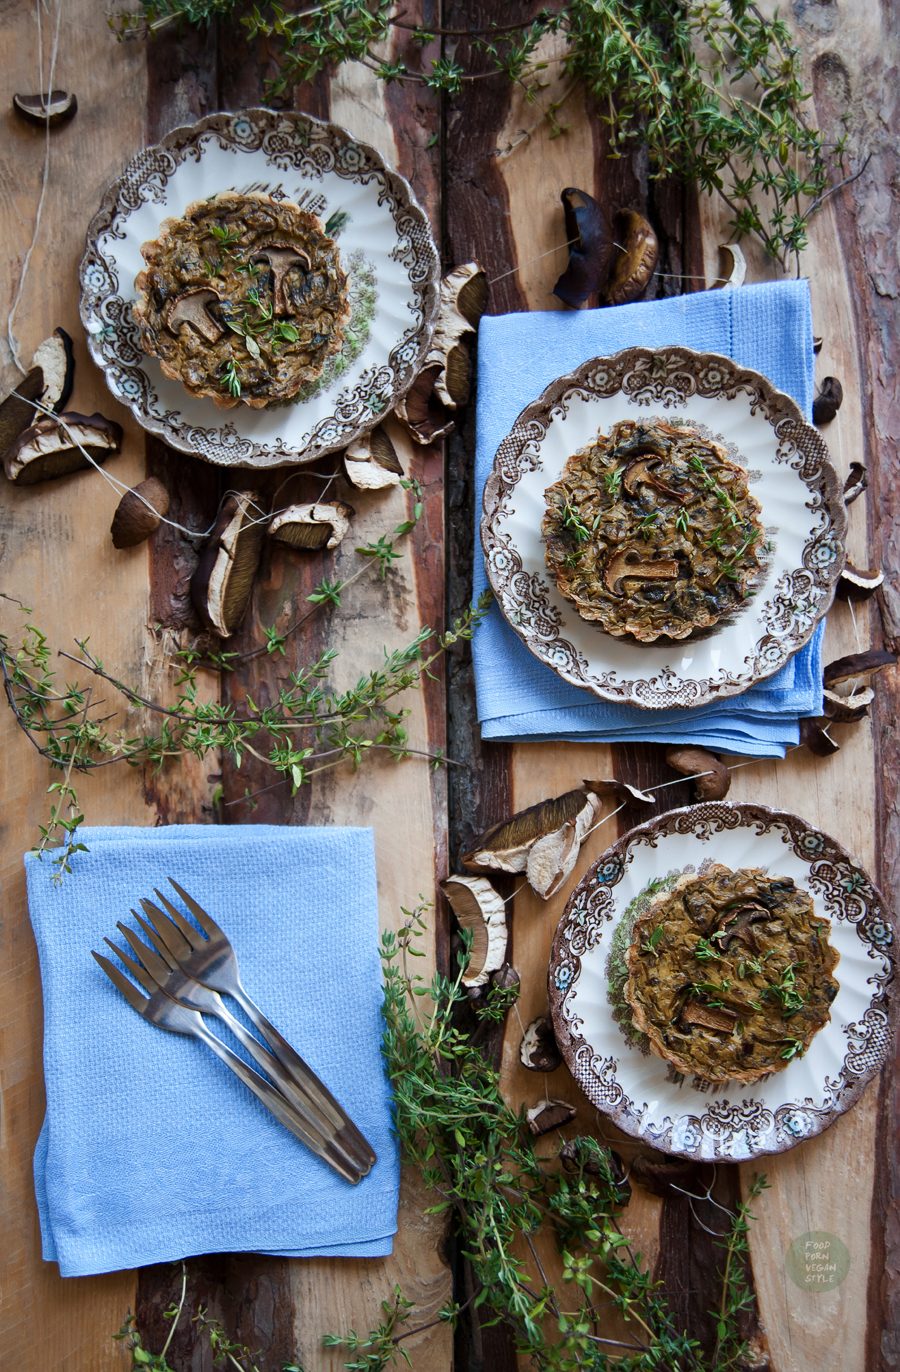 Vegan tartlets with wild mushrooms, herbs and tofu (gluten-free)